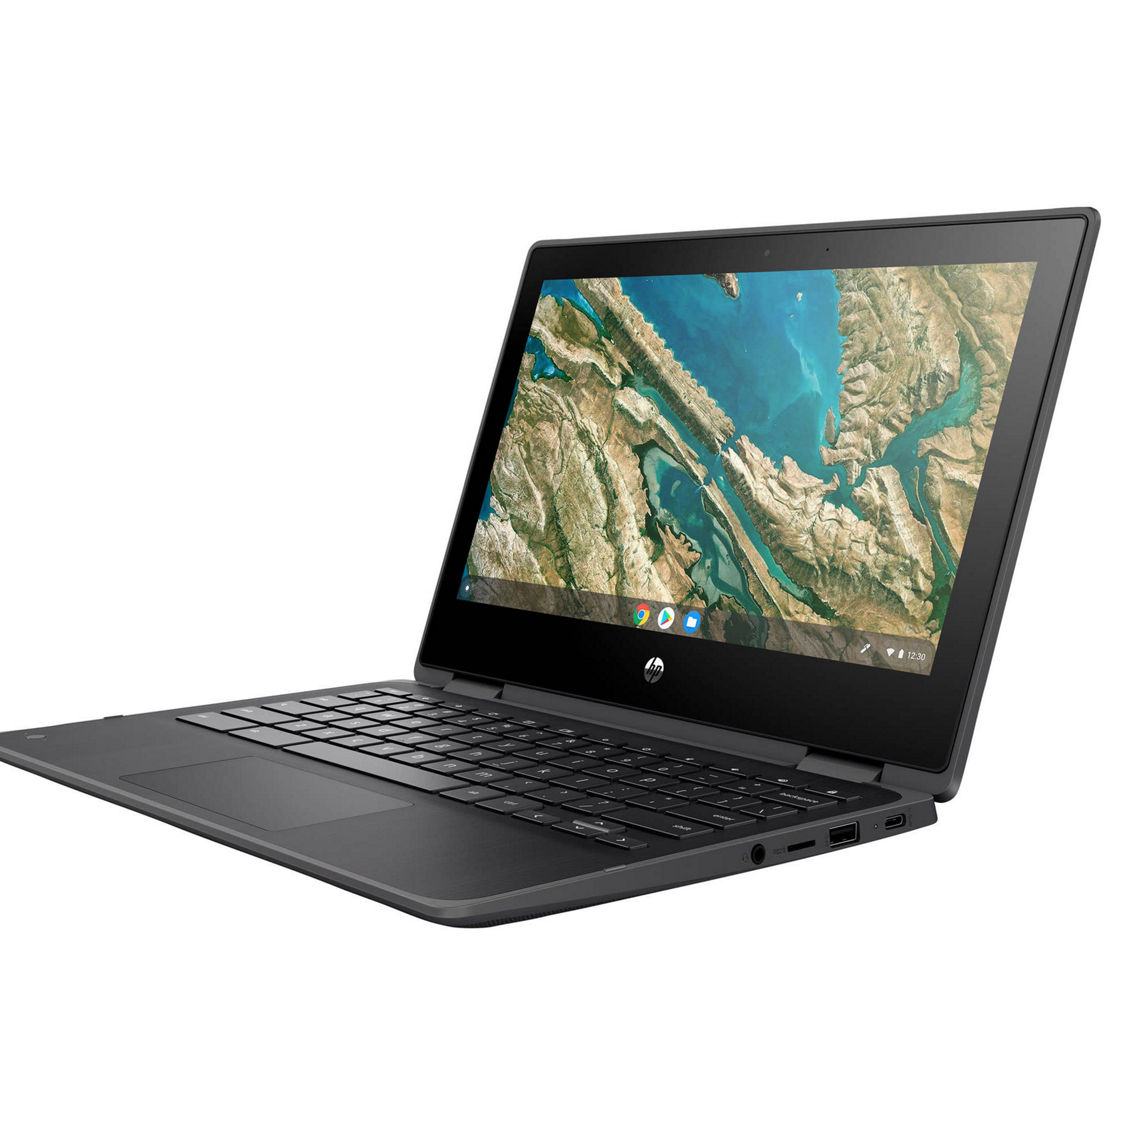 HP Chromebook X360 11 G3 Celeron N4020 1.1GHz 4GB 32GB SSD Laptop (Refurbished) - Image 4 of 4